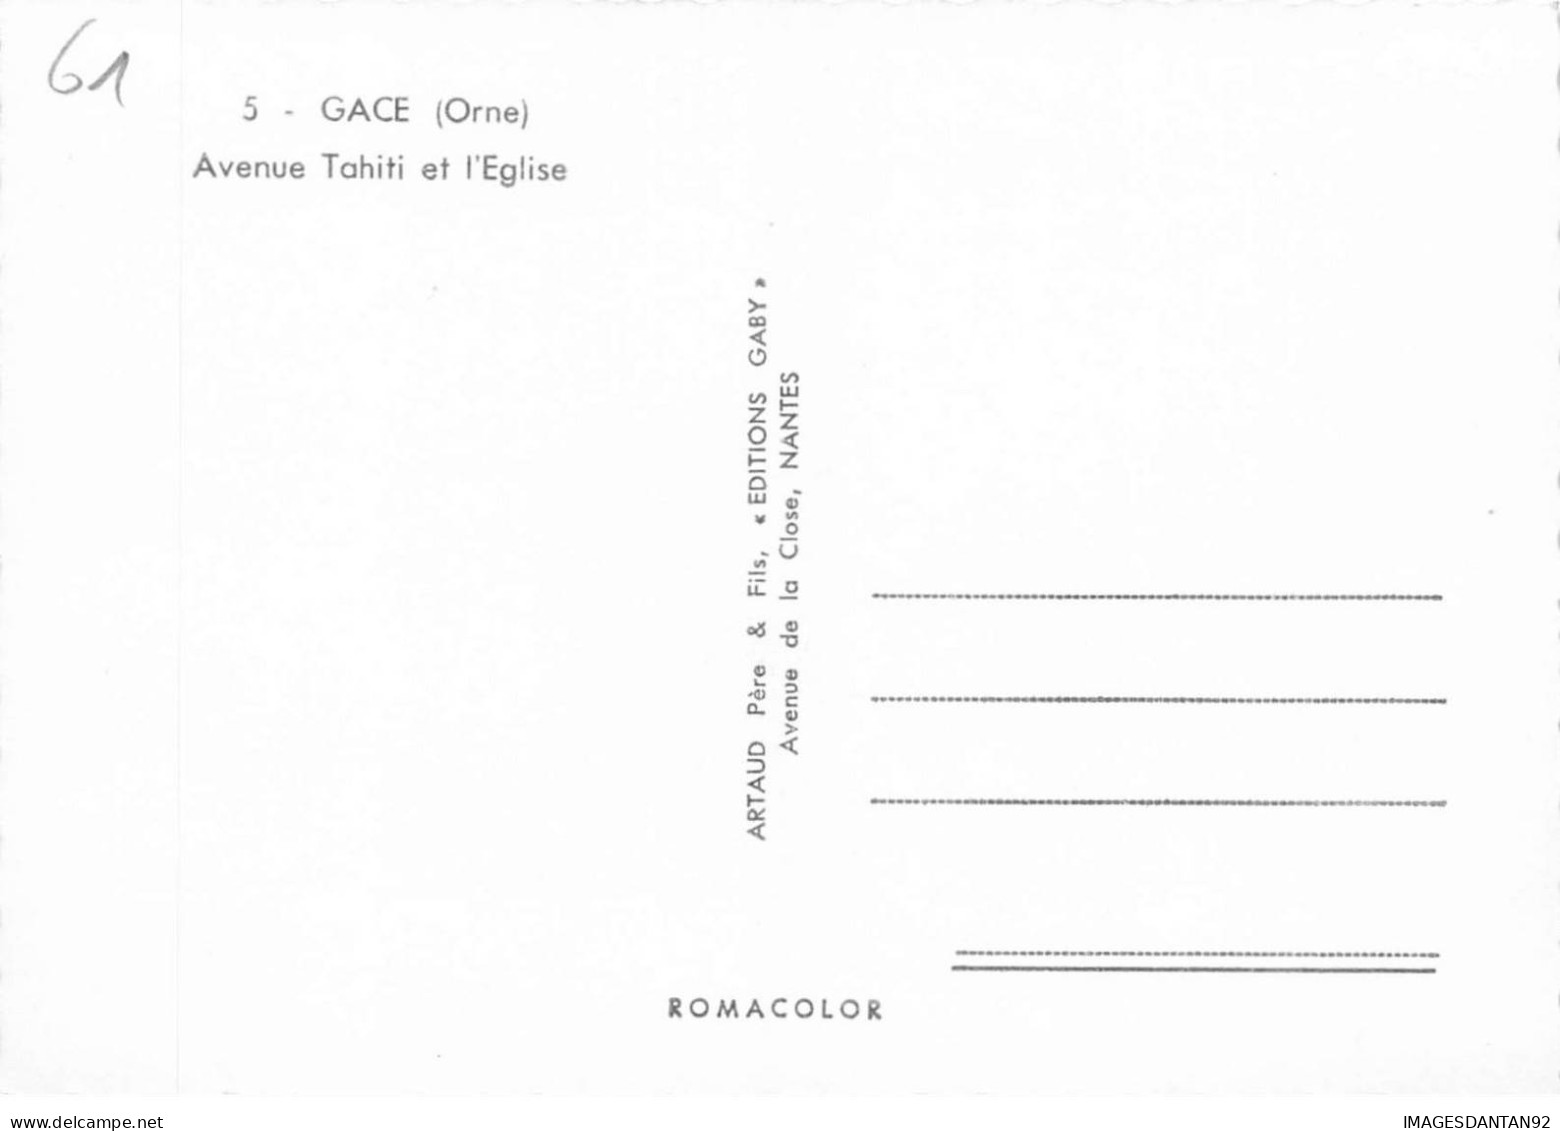 61 GACE AE#DC450 AVENUE TAHITI ET L EGLISE - Gace